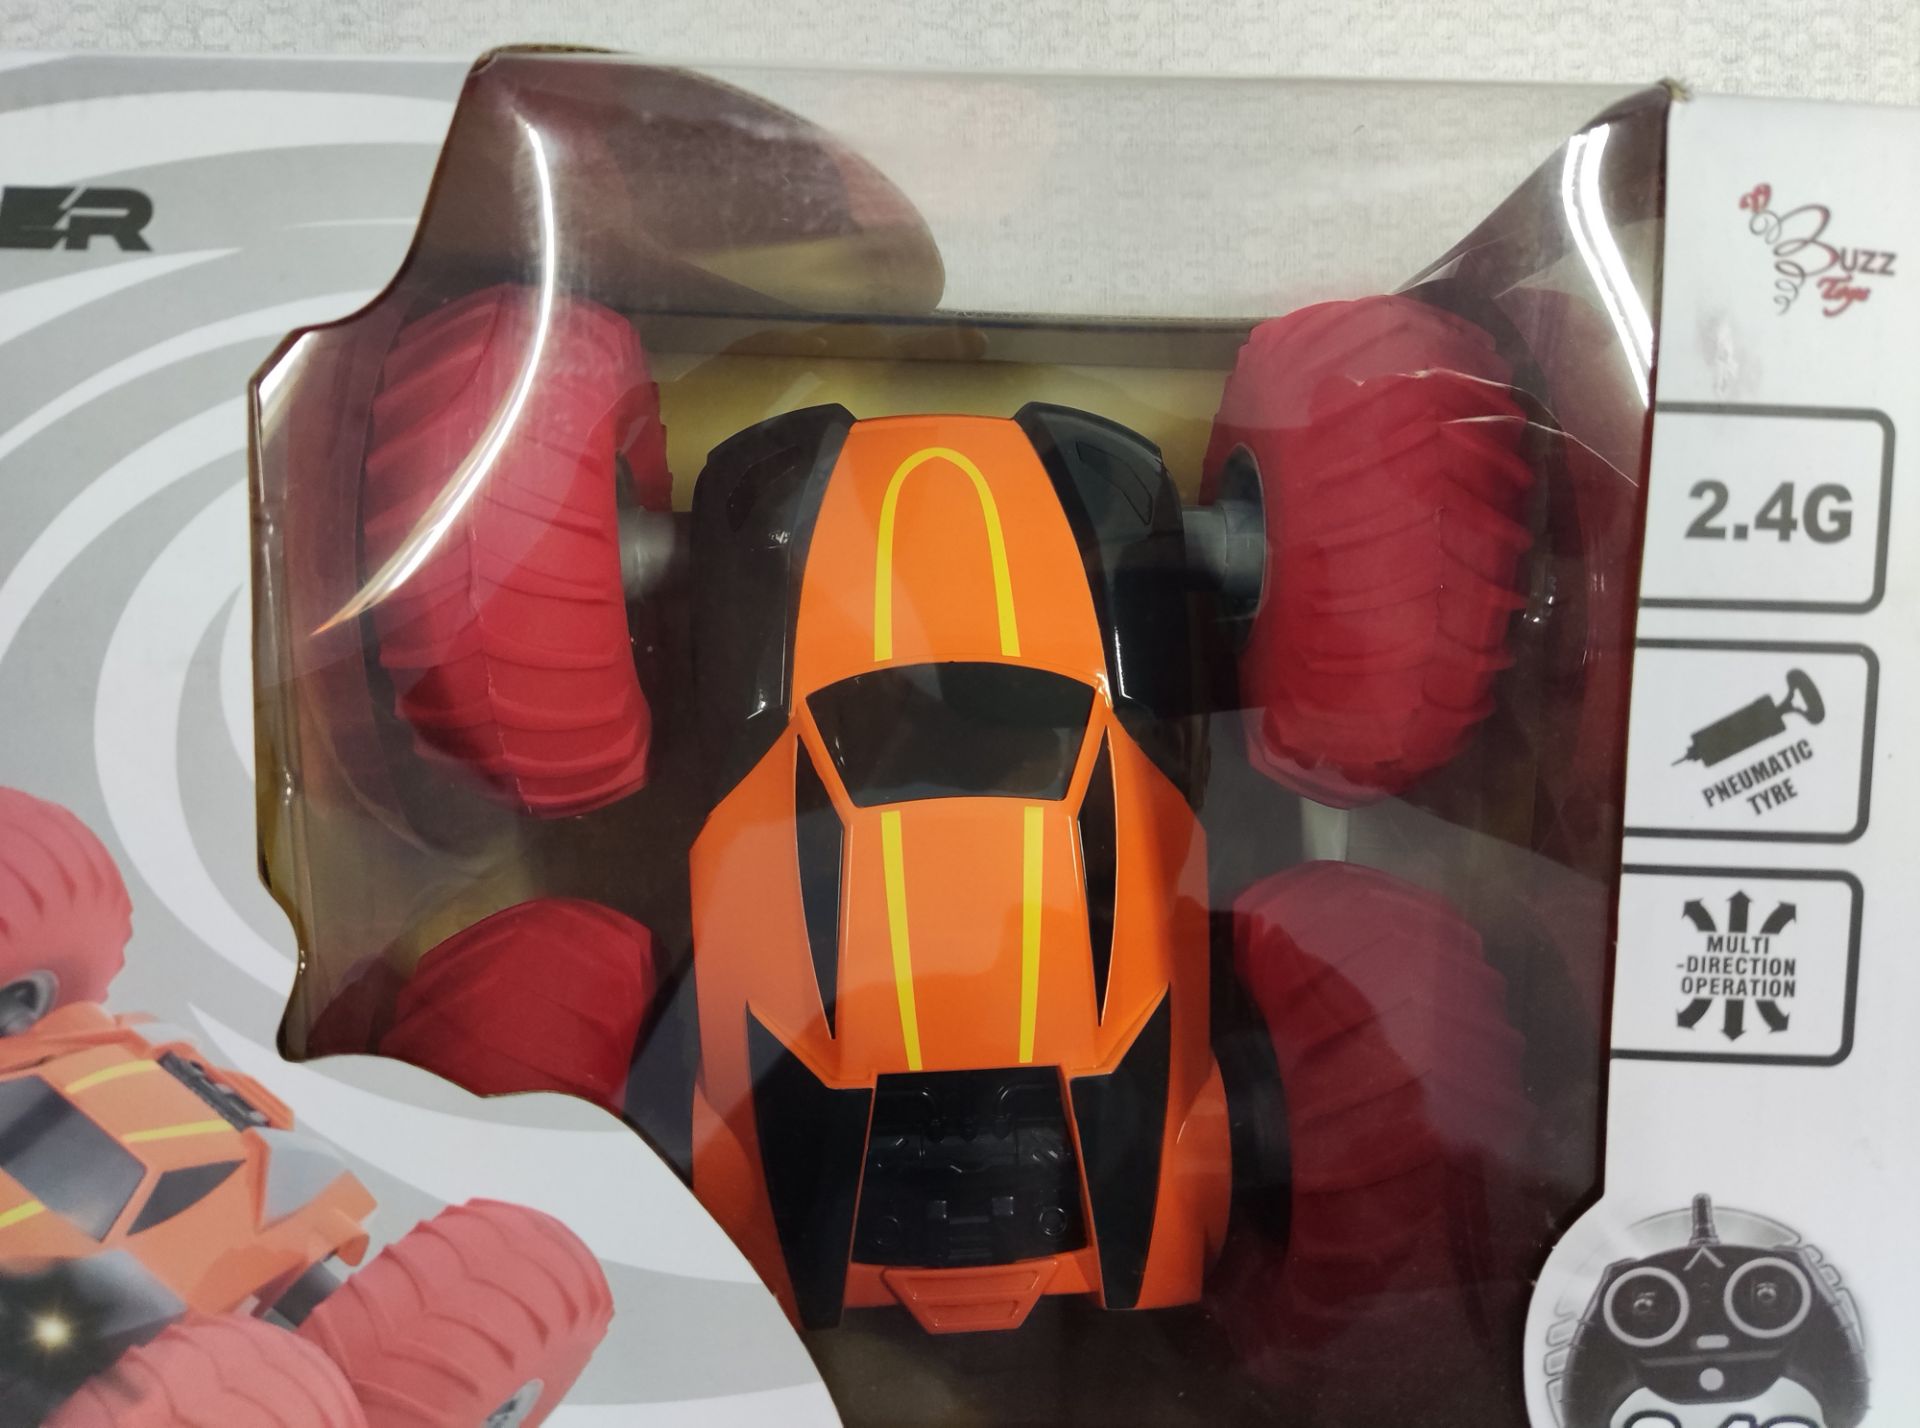 1 x Buzz Toys Thunder Car X R/C Vehicle in Orange - New/Boxed - Image 8 of 8